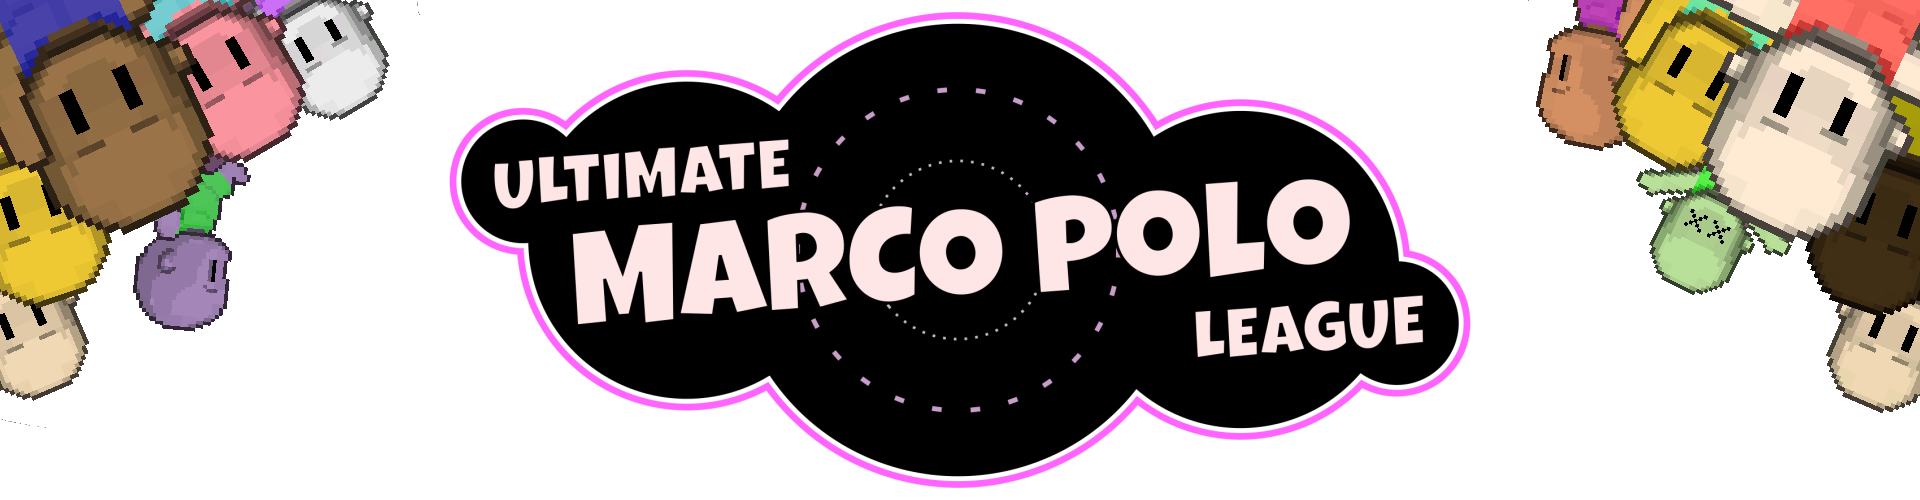 Ultimate Marco Polo League